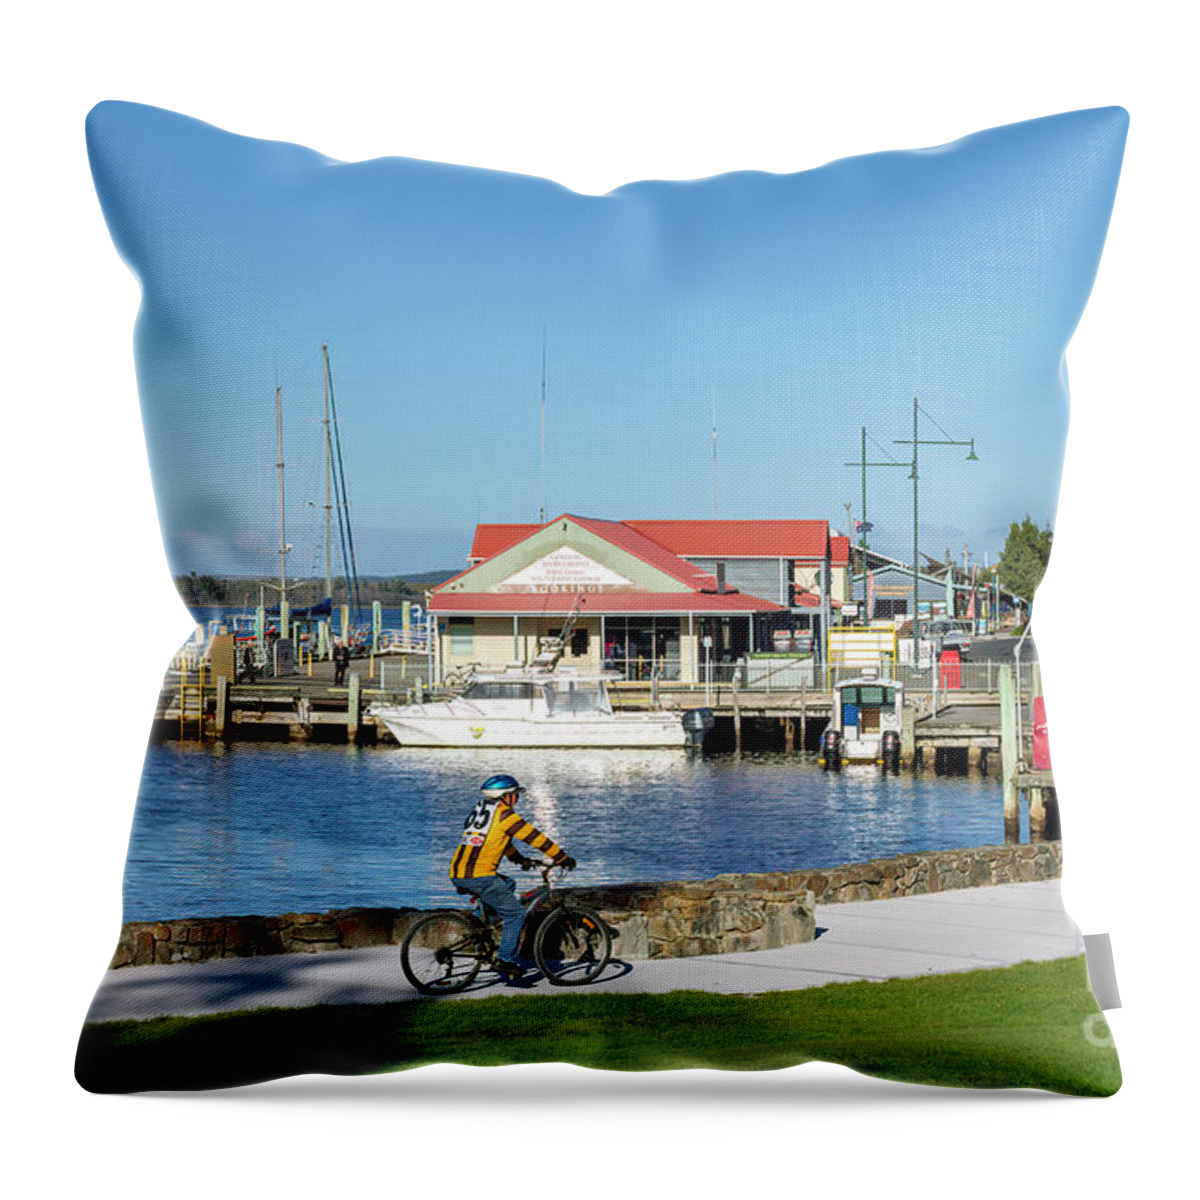 Strahan Throw Pillow featuring the photograph Strahan, Tasmania, Australia by Elaine Teague